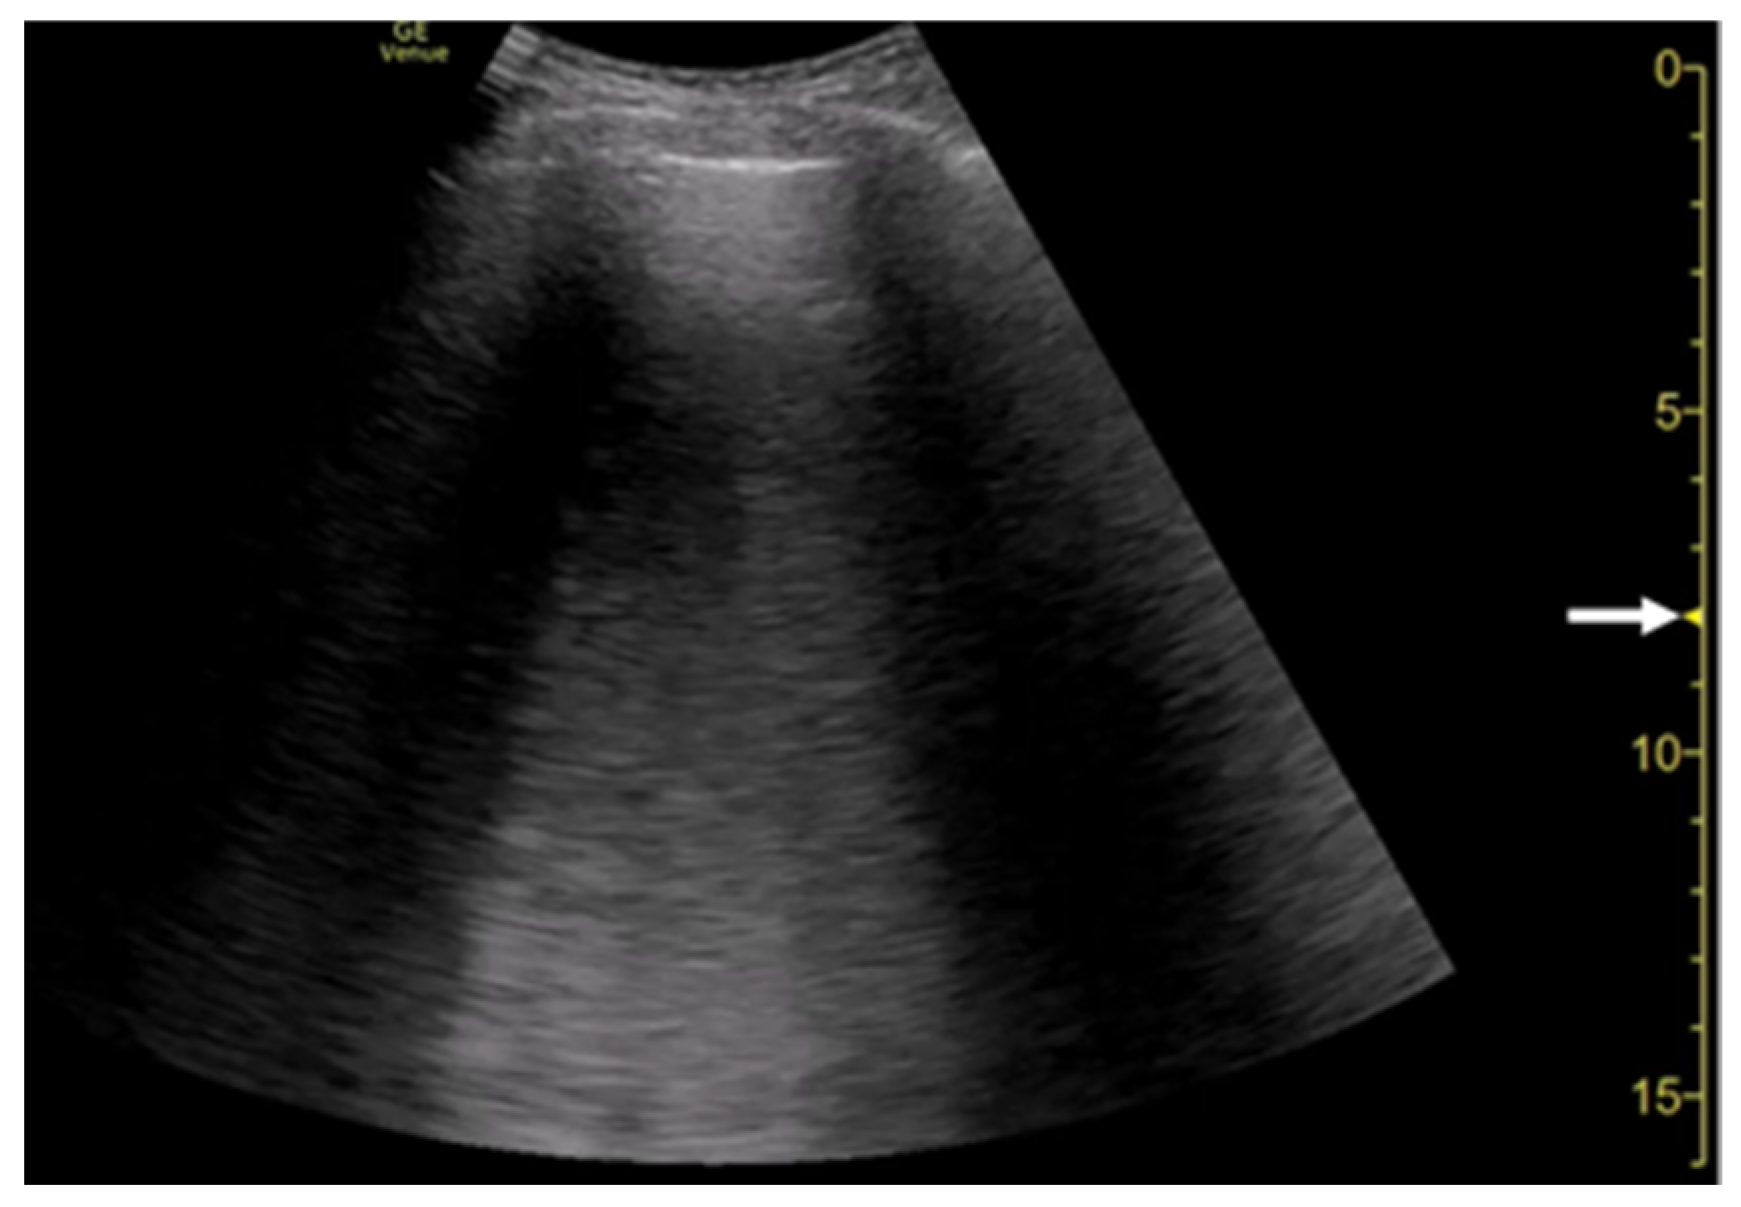 curvilinear probe ultrasound slide